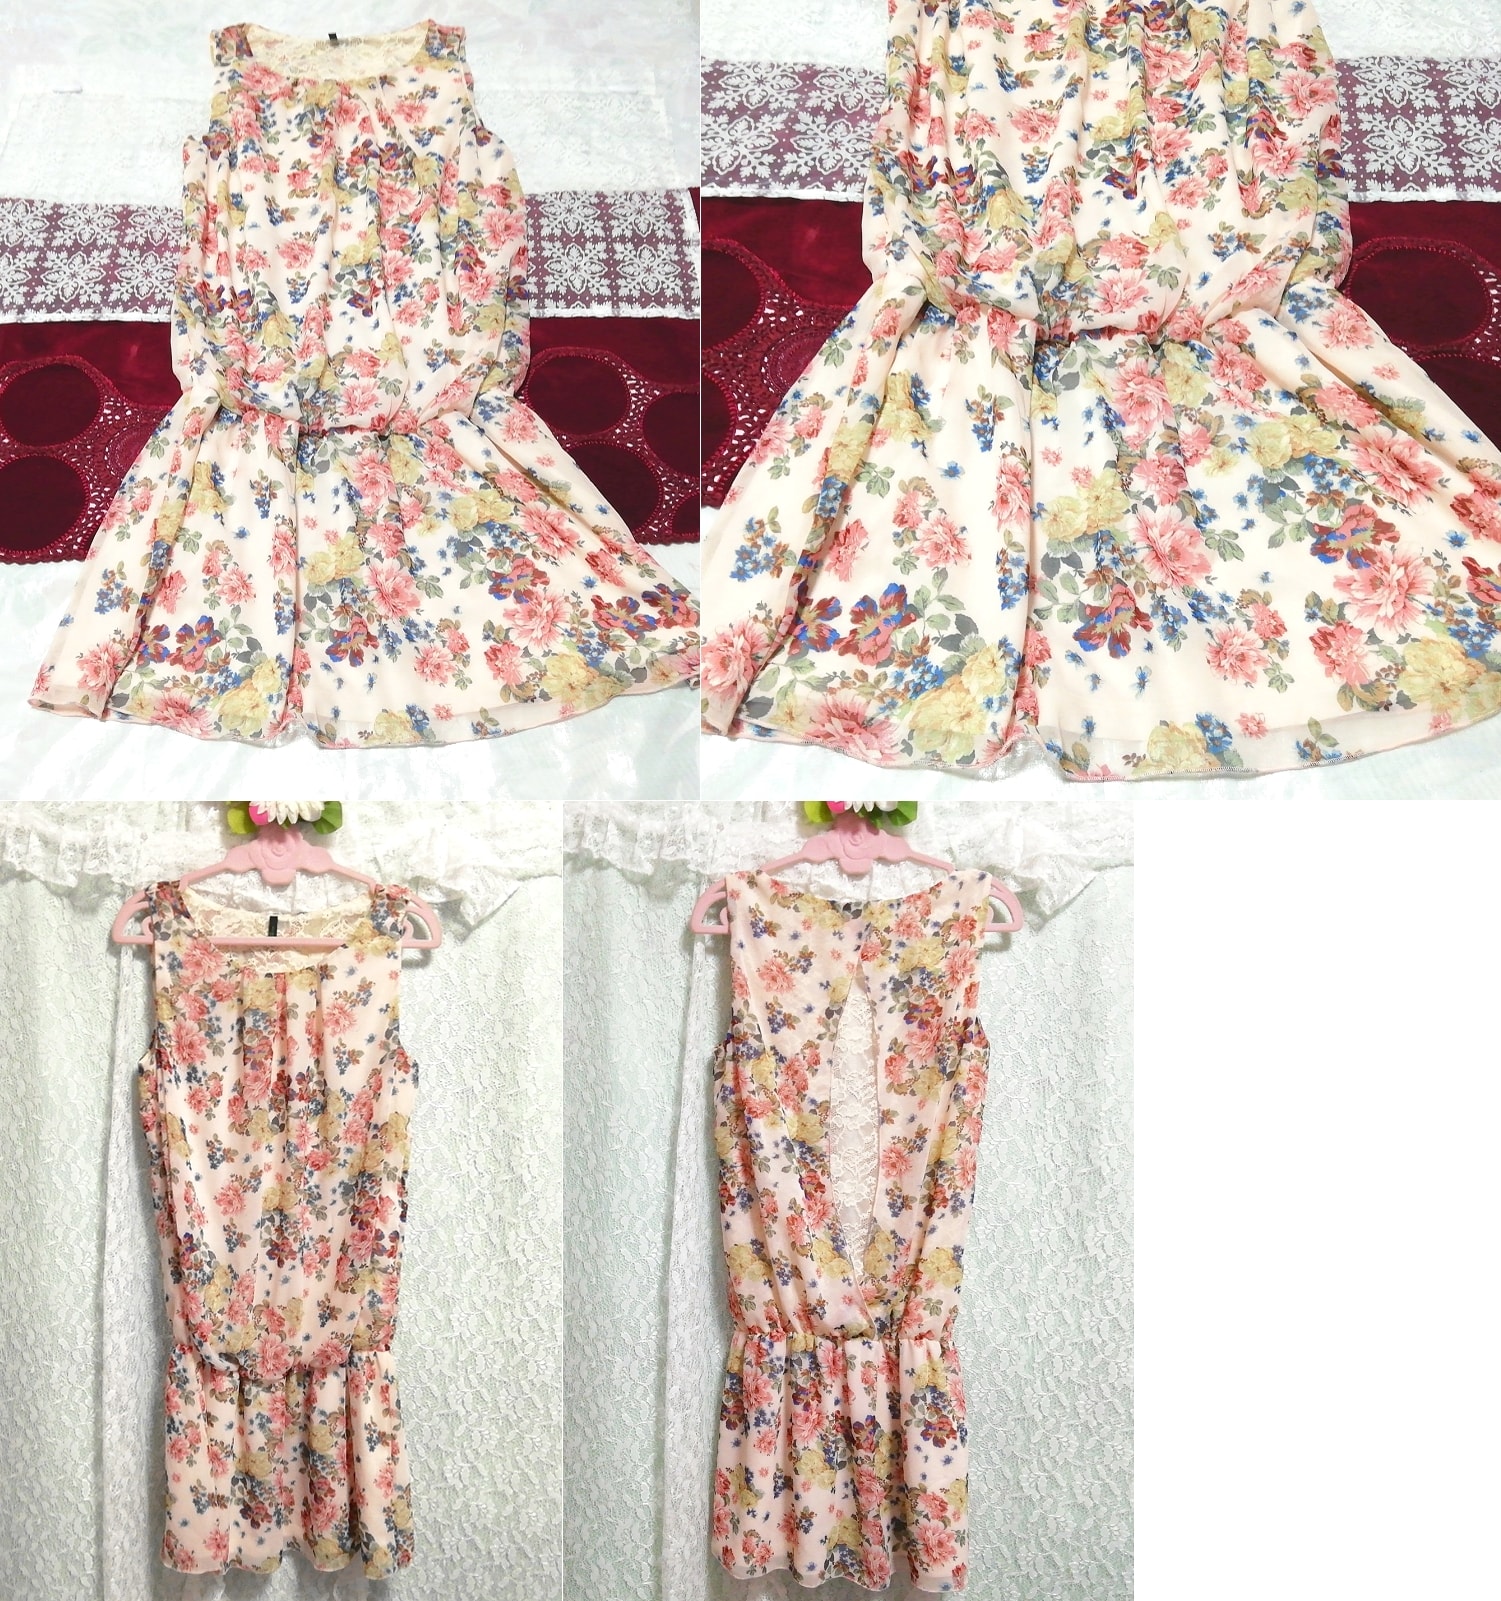 Pink teal chiffon sleeveless negligee nightgown nightwear mini dress, mini skirt, m size